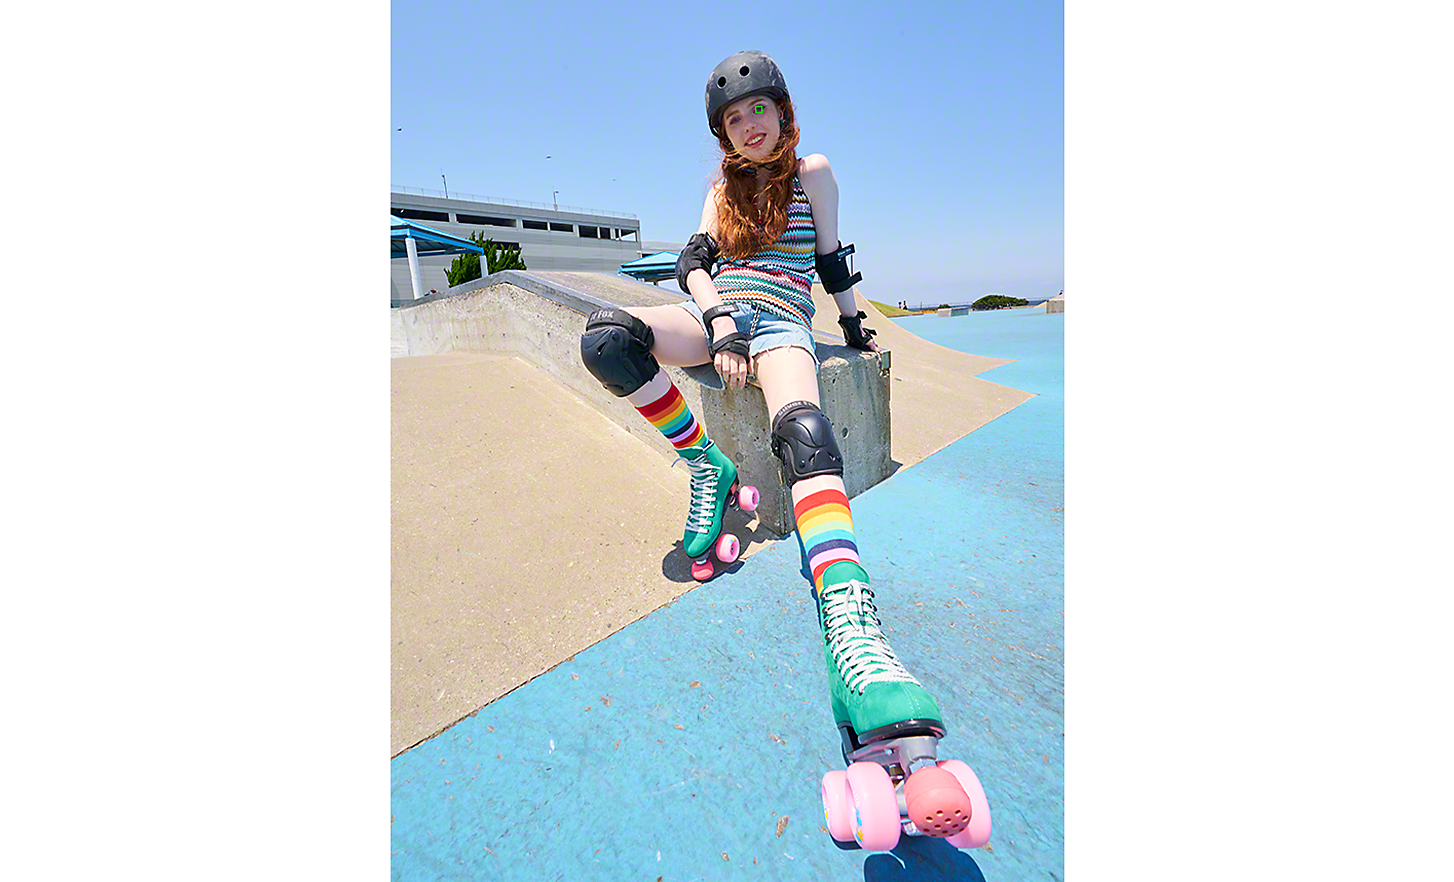 A roller skater at a skate park, a green square over her eye denoting Real-time Eye AF